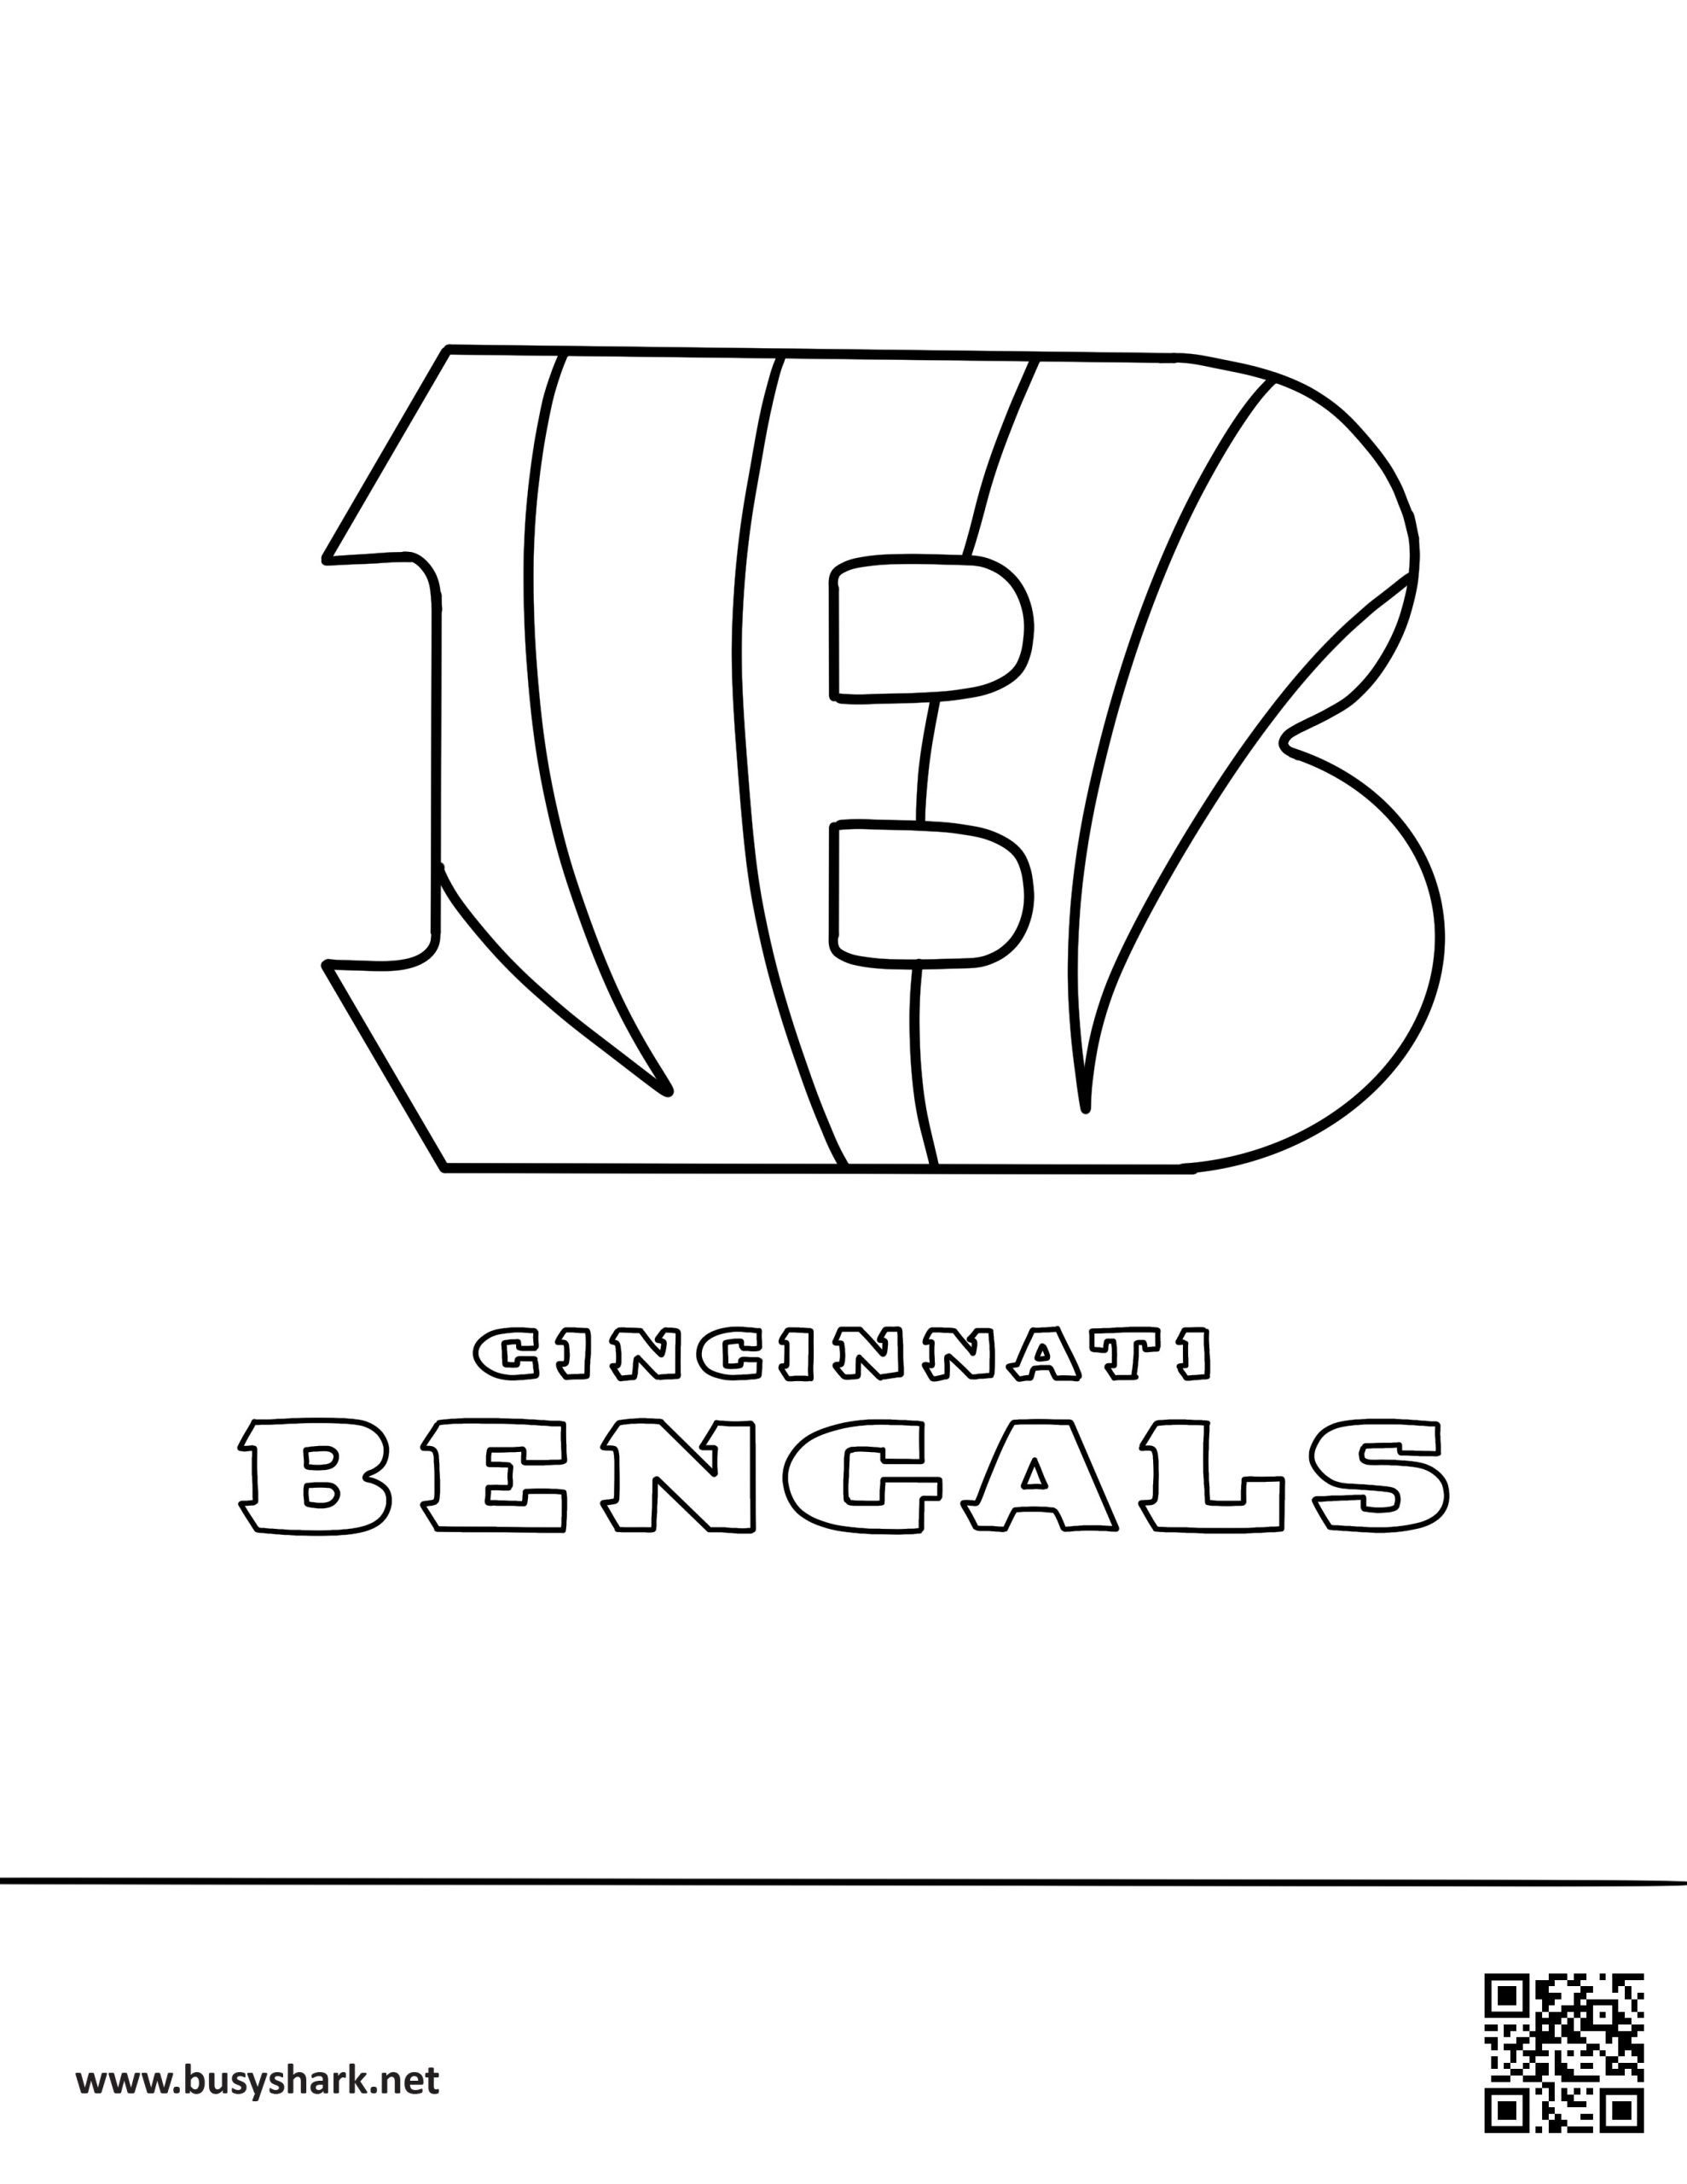 Cincinnati bengals logo coloring page